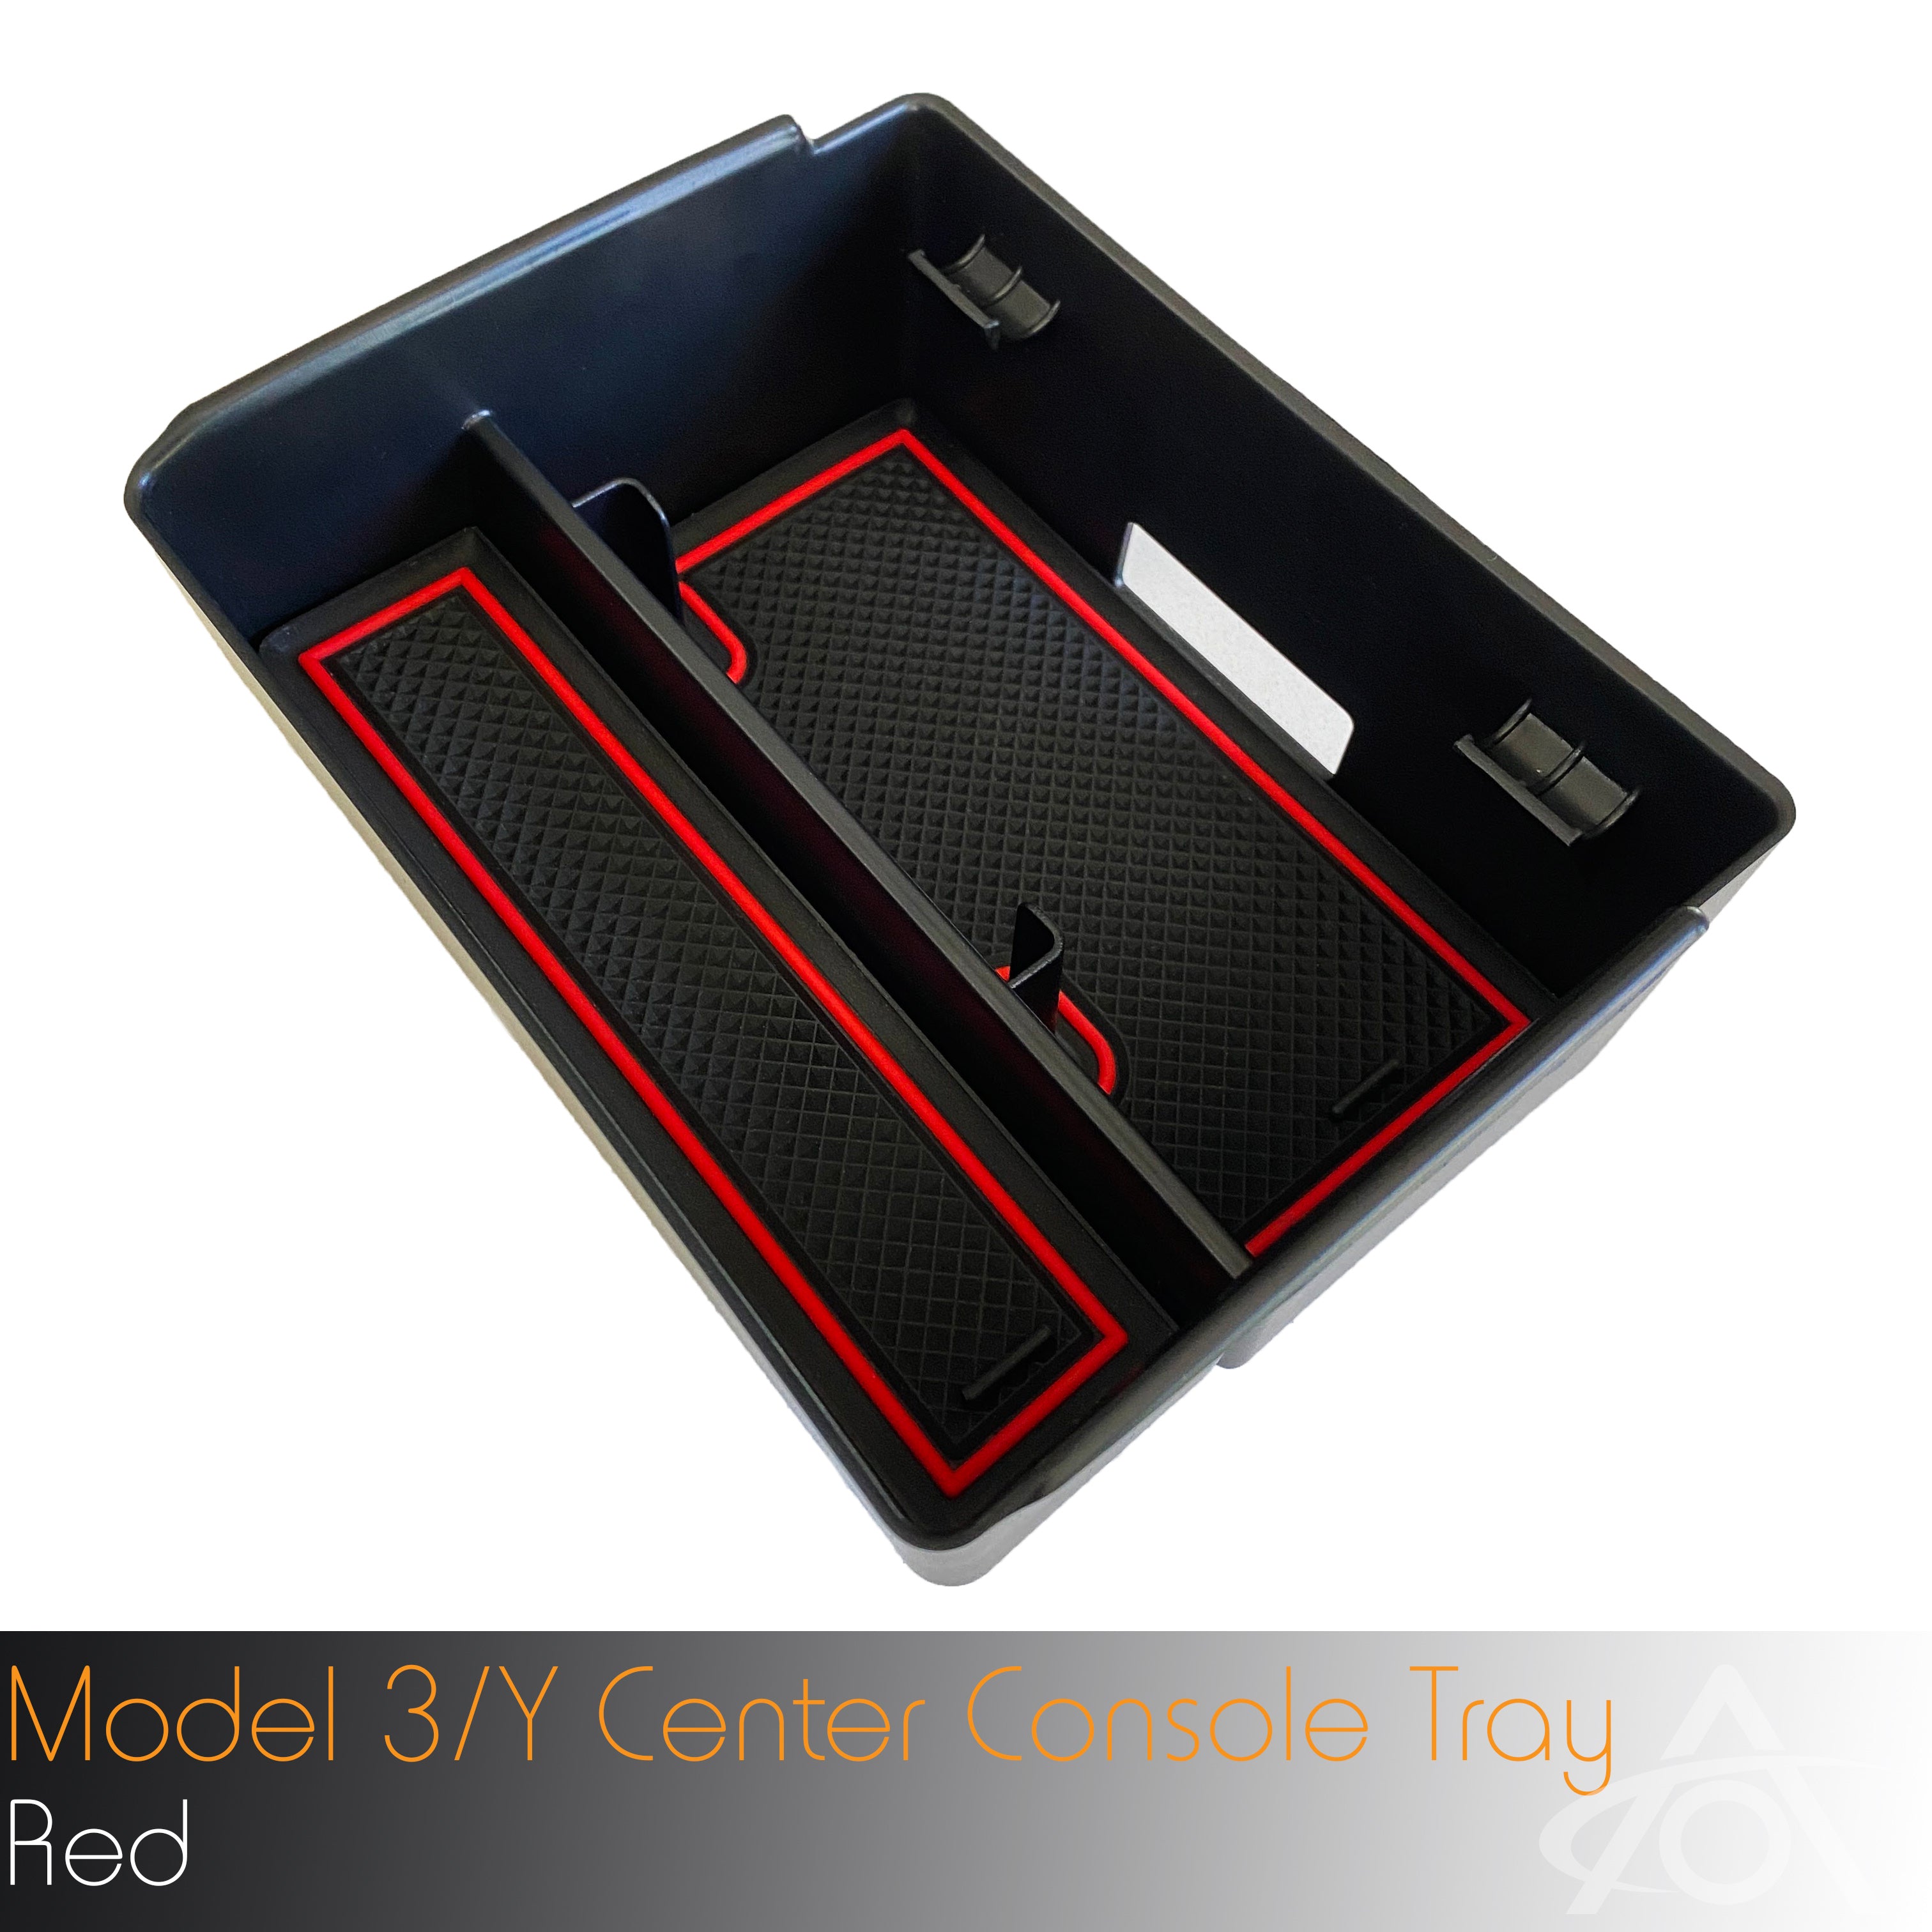 Tesla Model 3 & Y Center Console Organizer Tray 